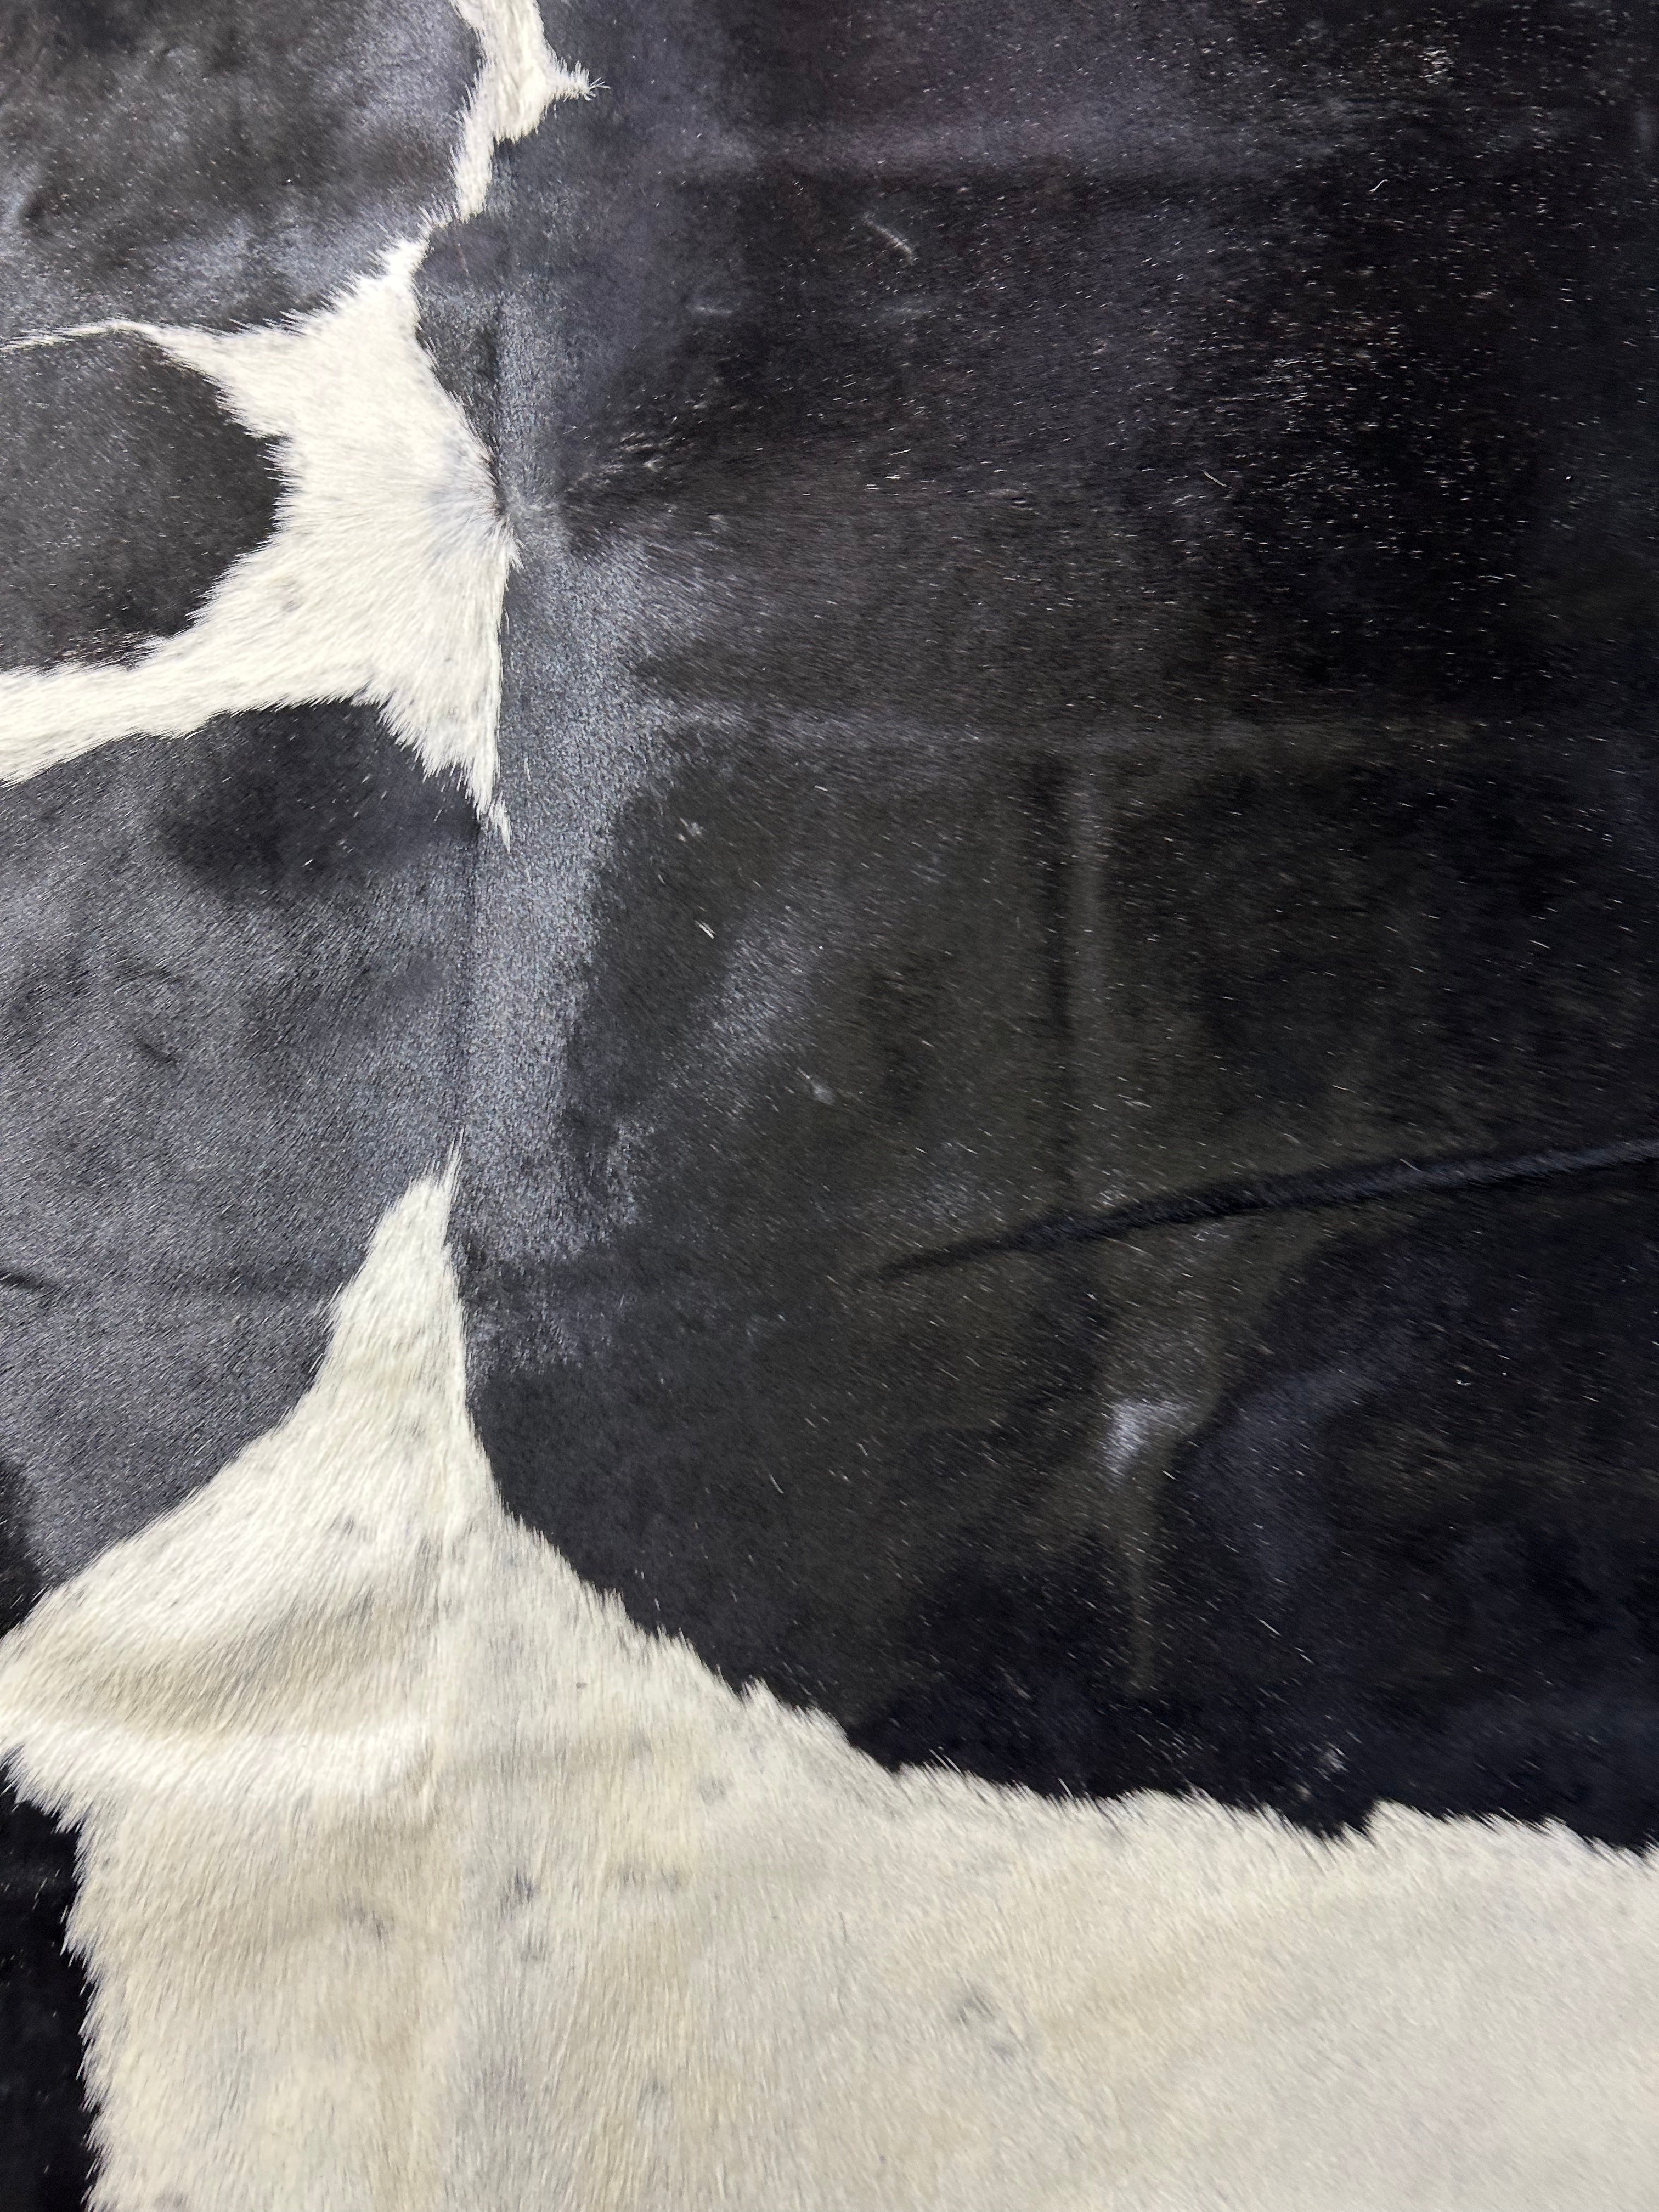 Black & White Cowhide Rug Size: 5.5x5.2 feet M-1669